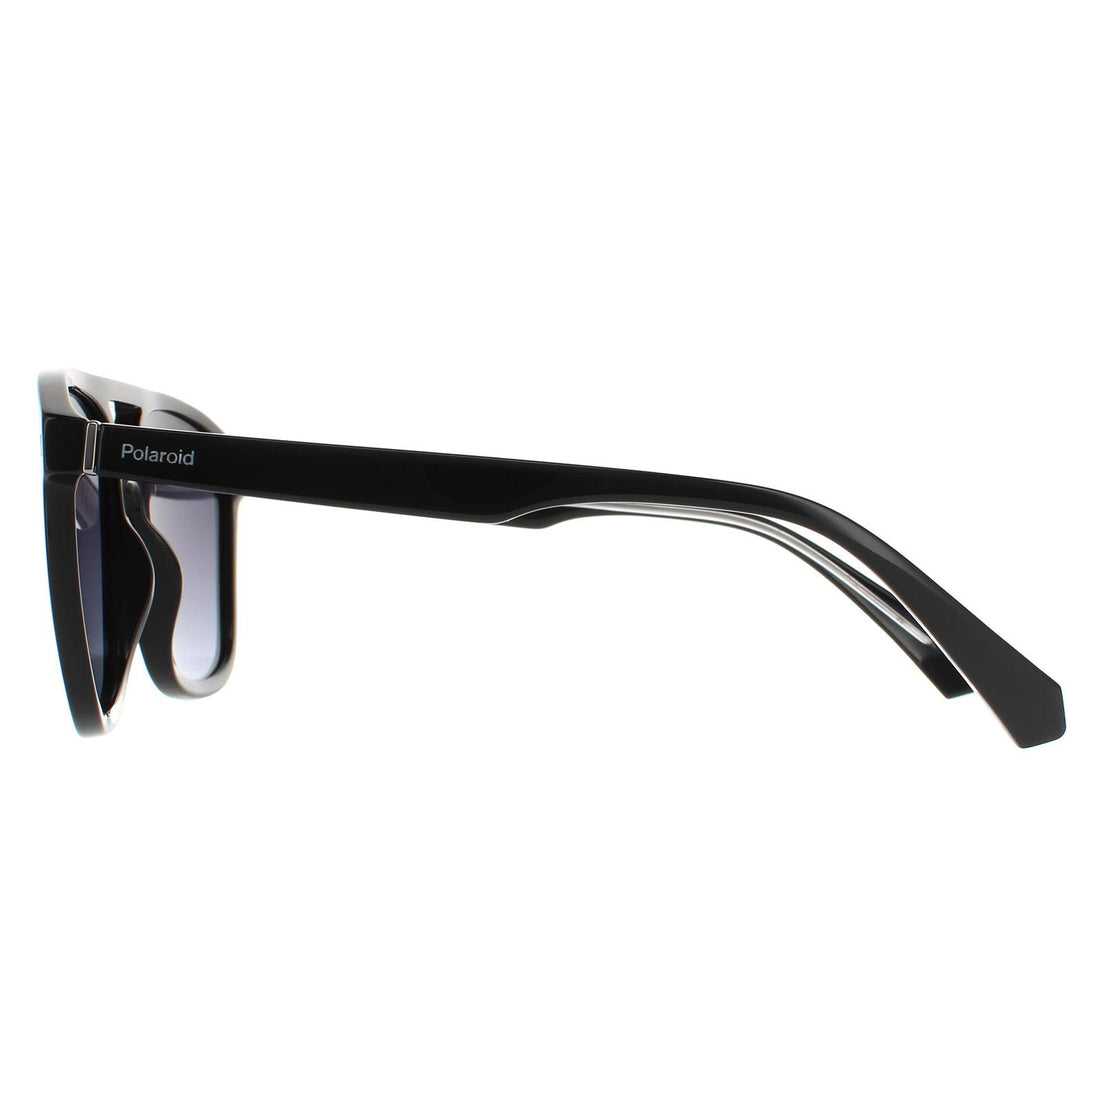 Polaroid Sunglasses PLD 2118/S/X 807 WJ Black Grey Gradient Polarized